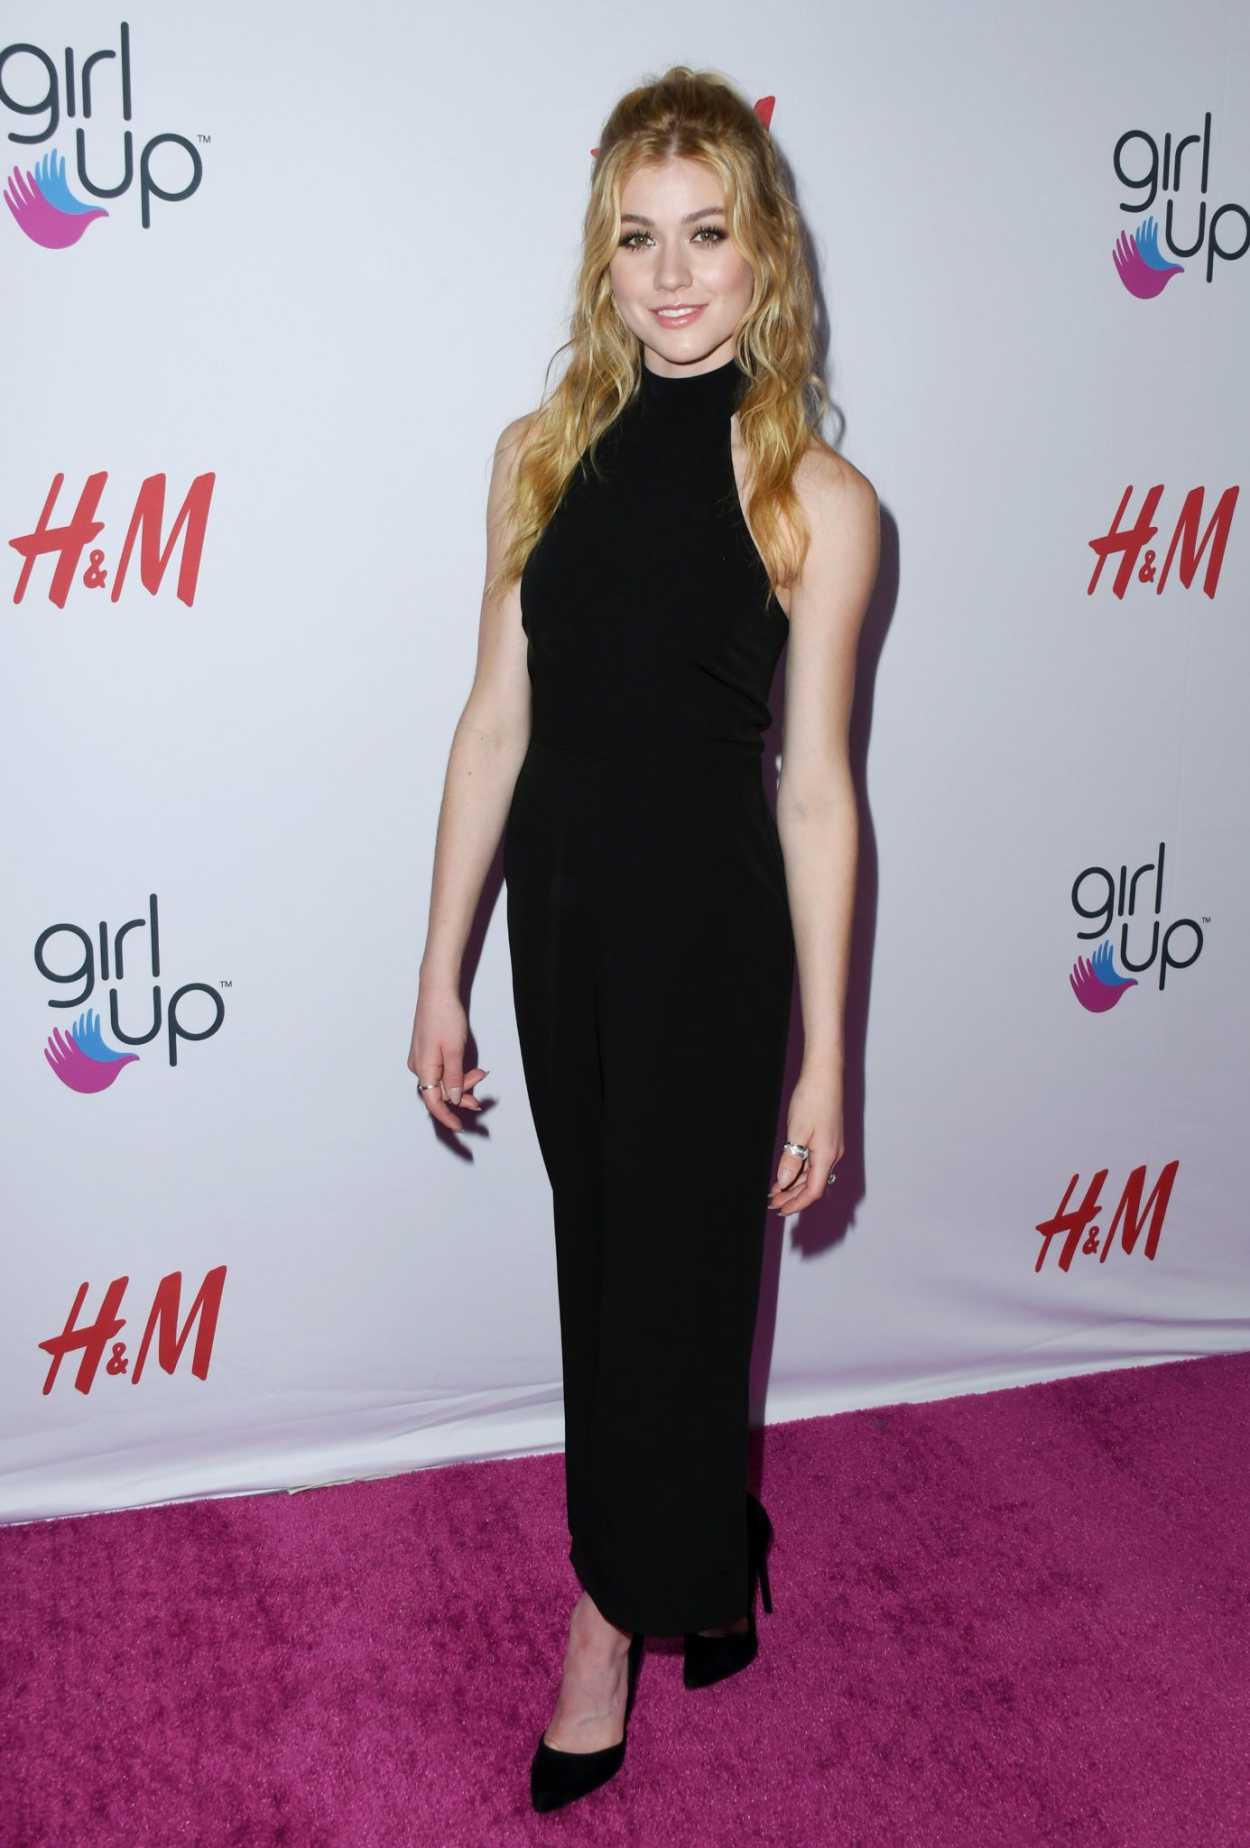 Katherine McNamara Attends the 2nd Annual Girl Up #GirlHero Awards at ...